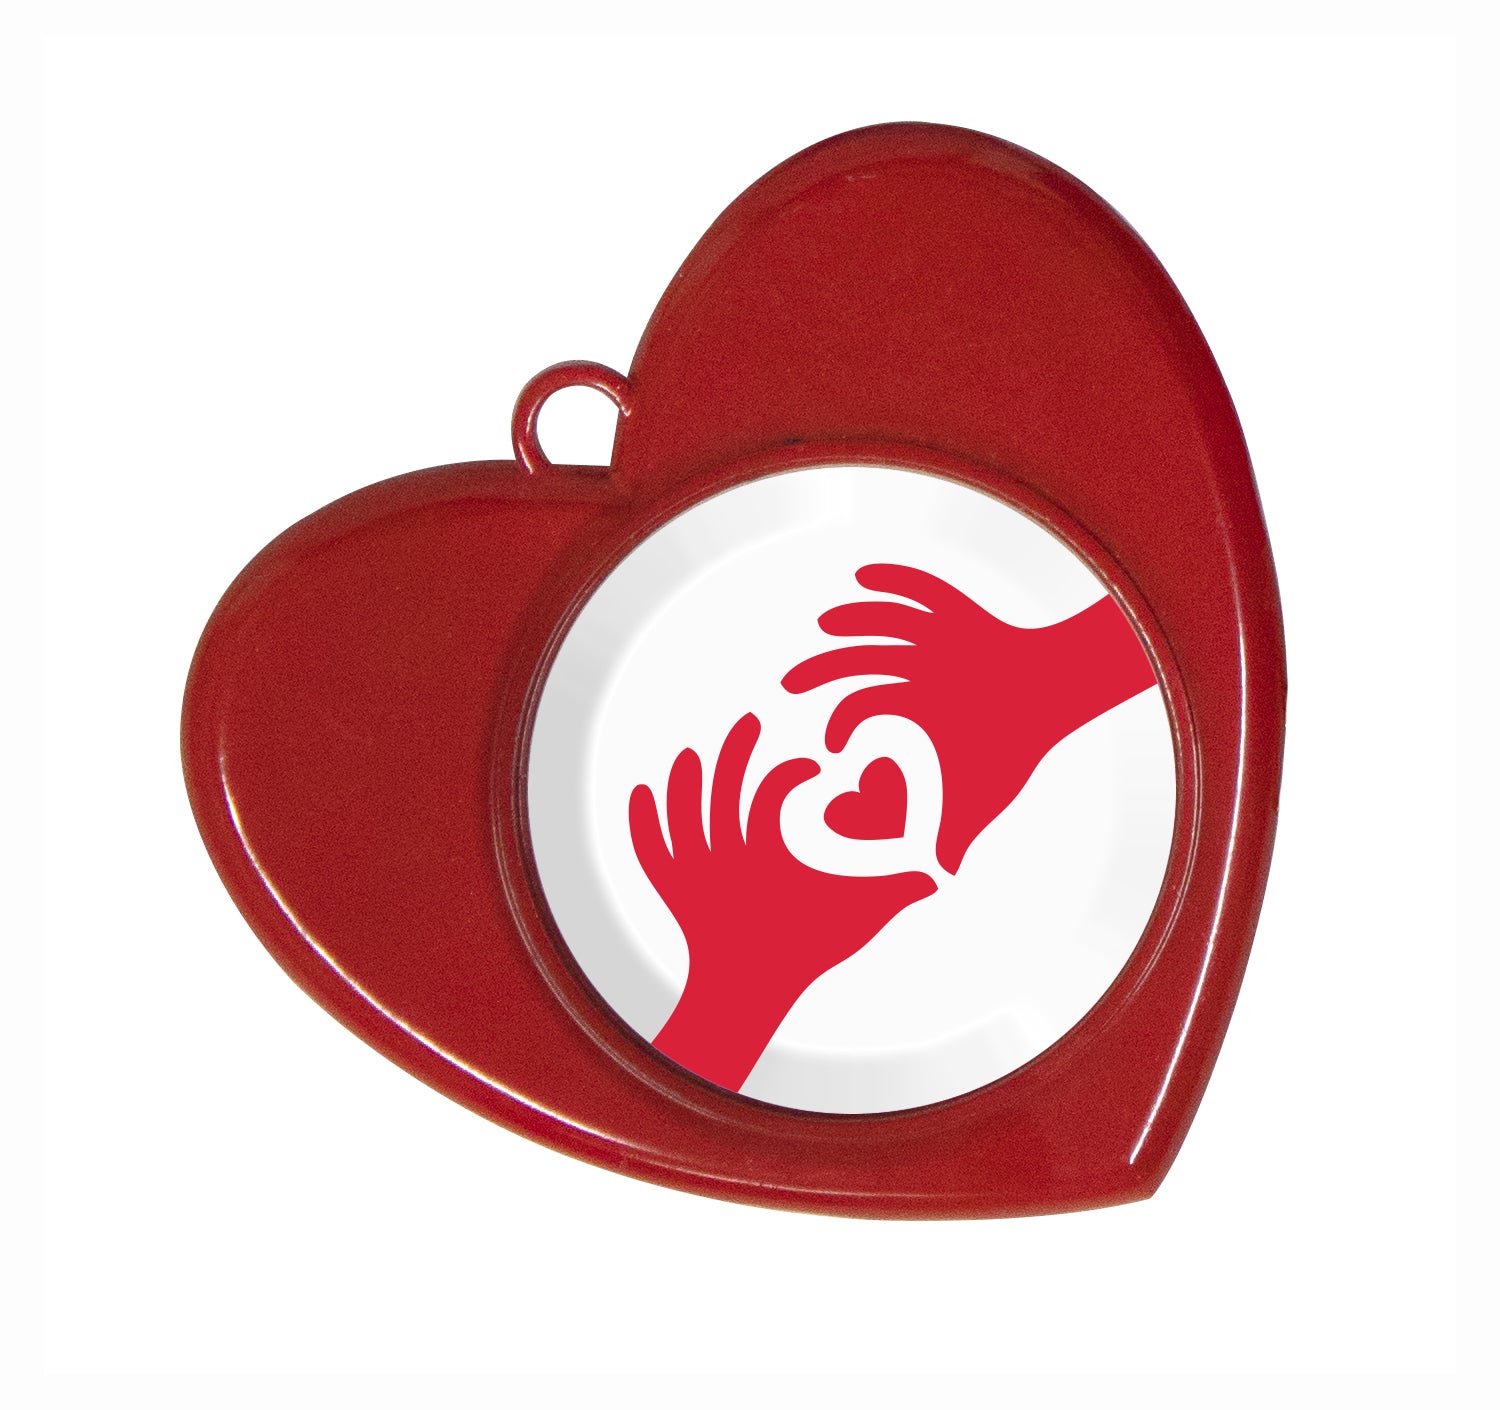 3D Cast Red Heart Medal